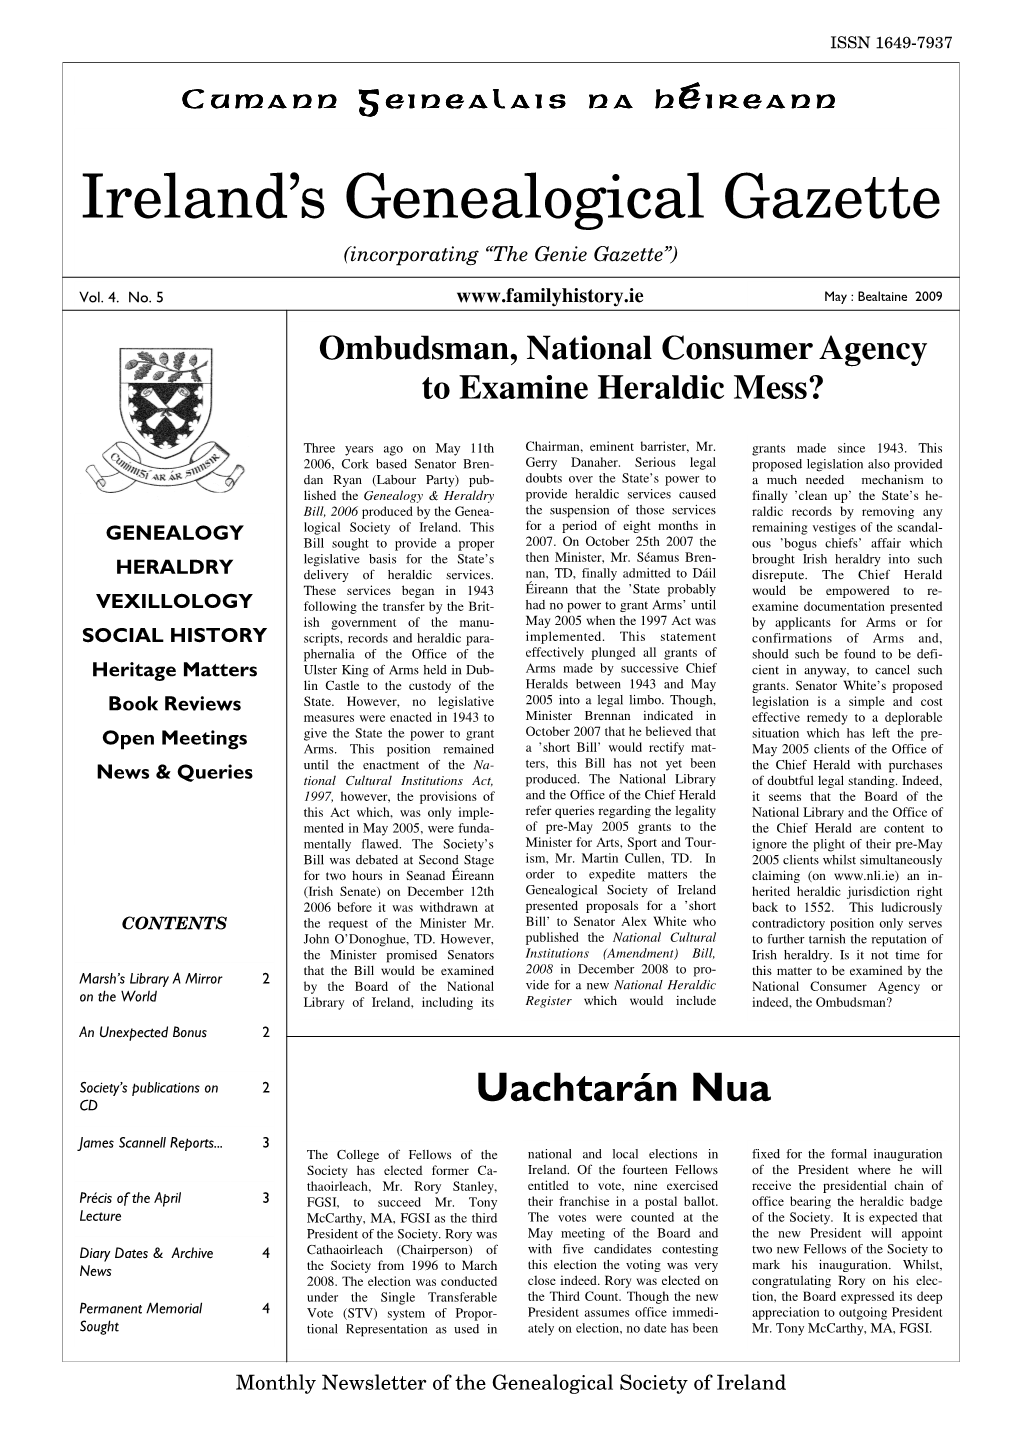 Ireland's Genealogical Gazette (May 2009)